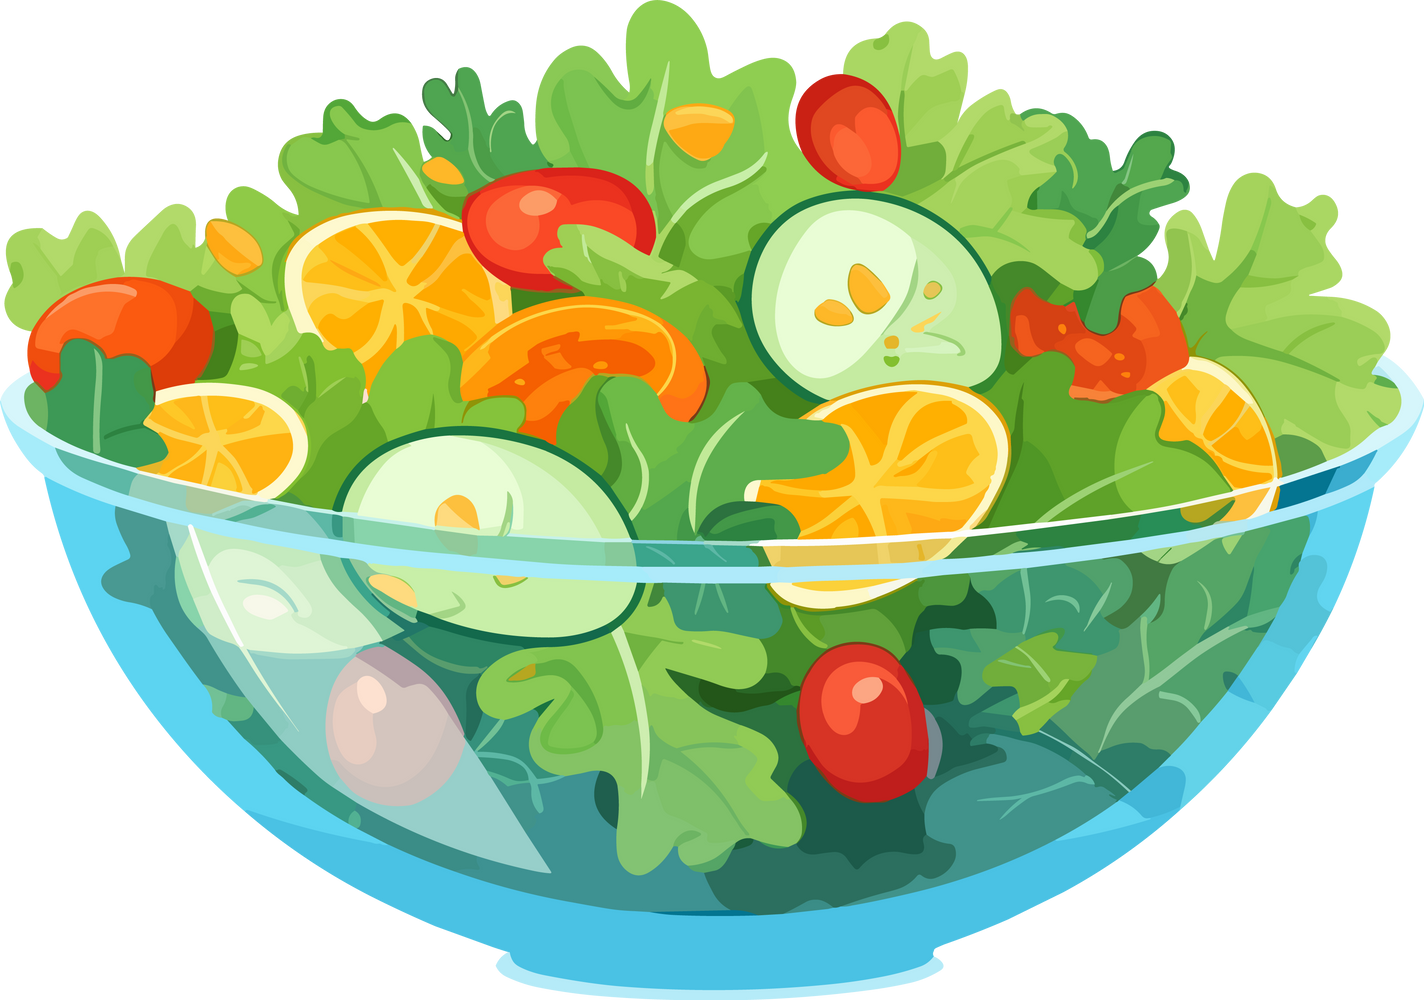 Salad | Fresh Vegetables in a Bowl